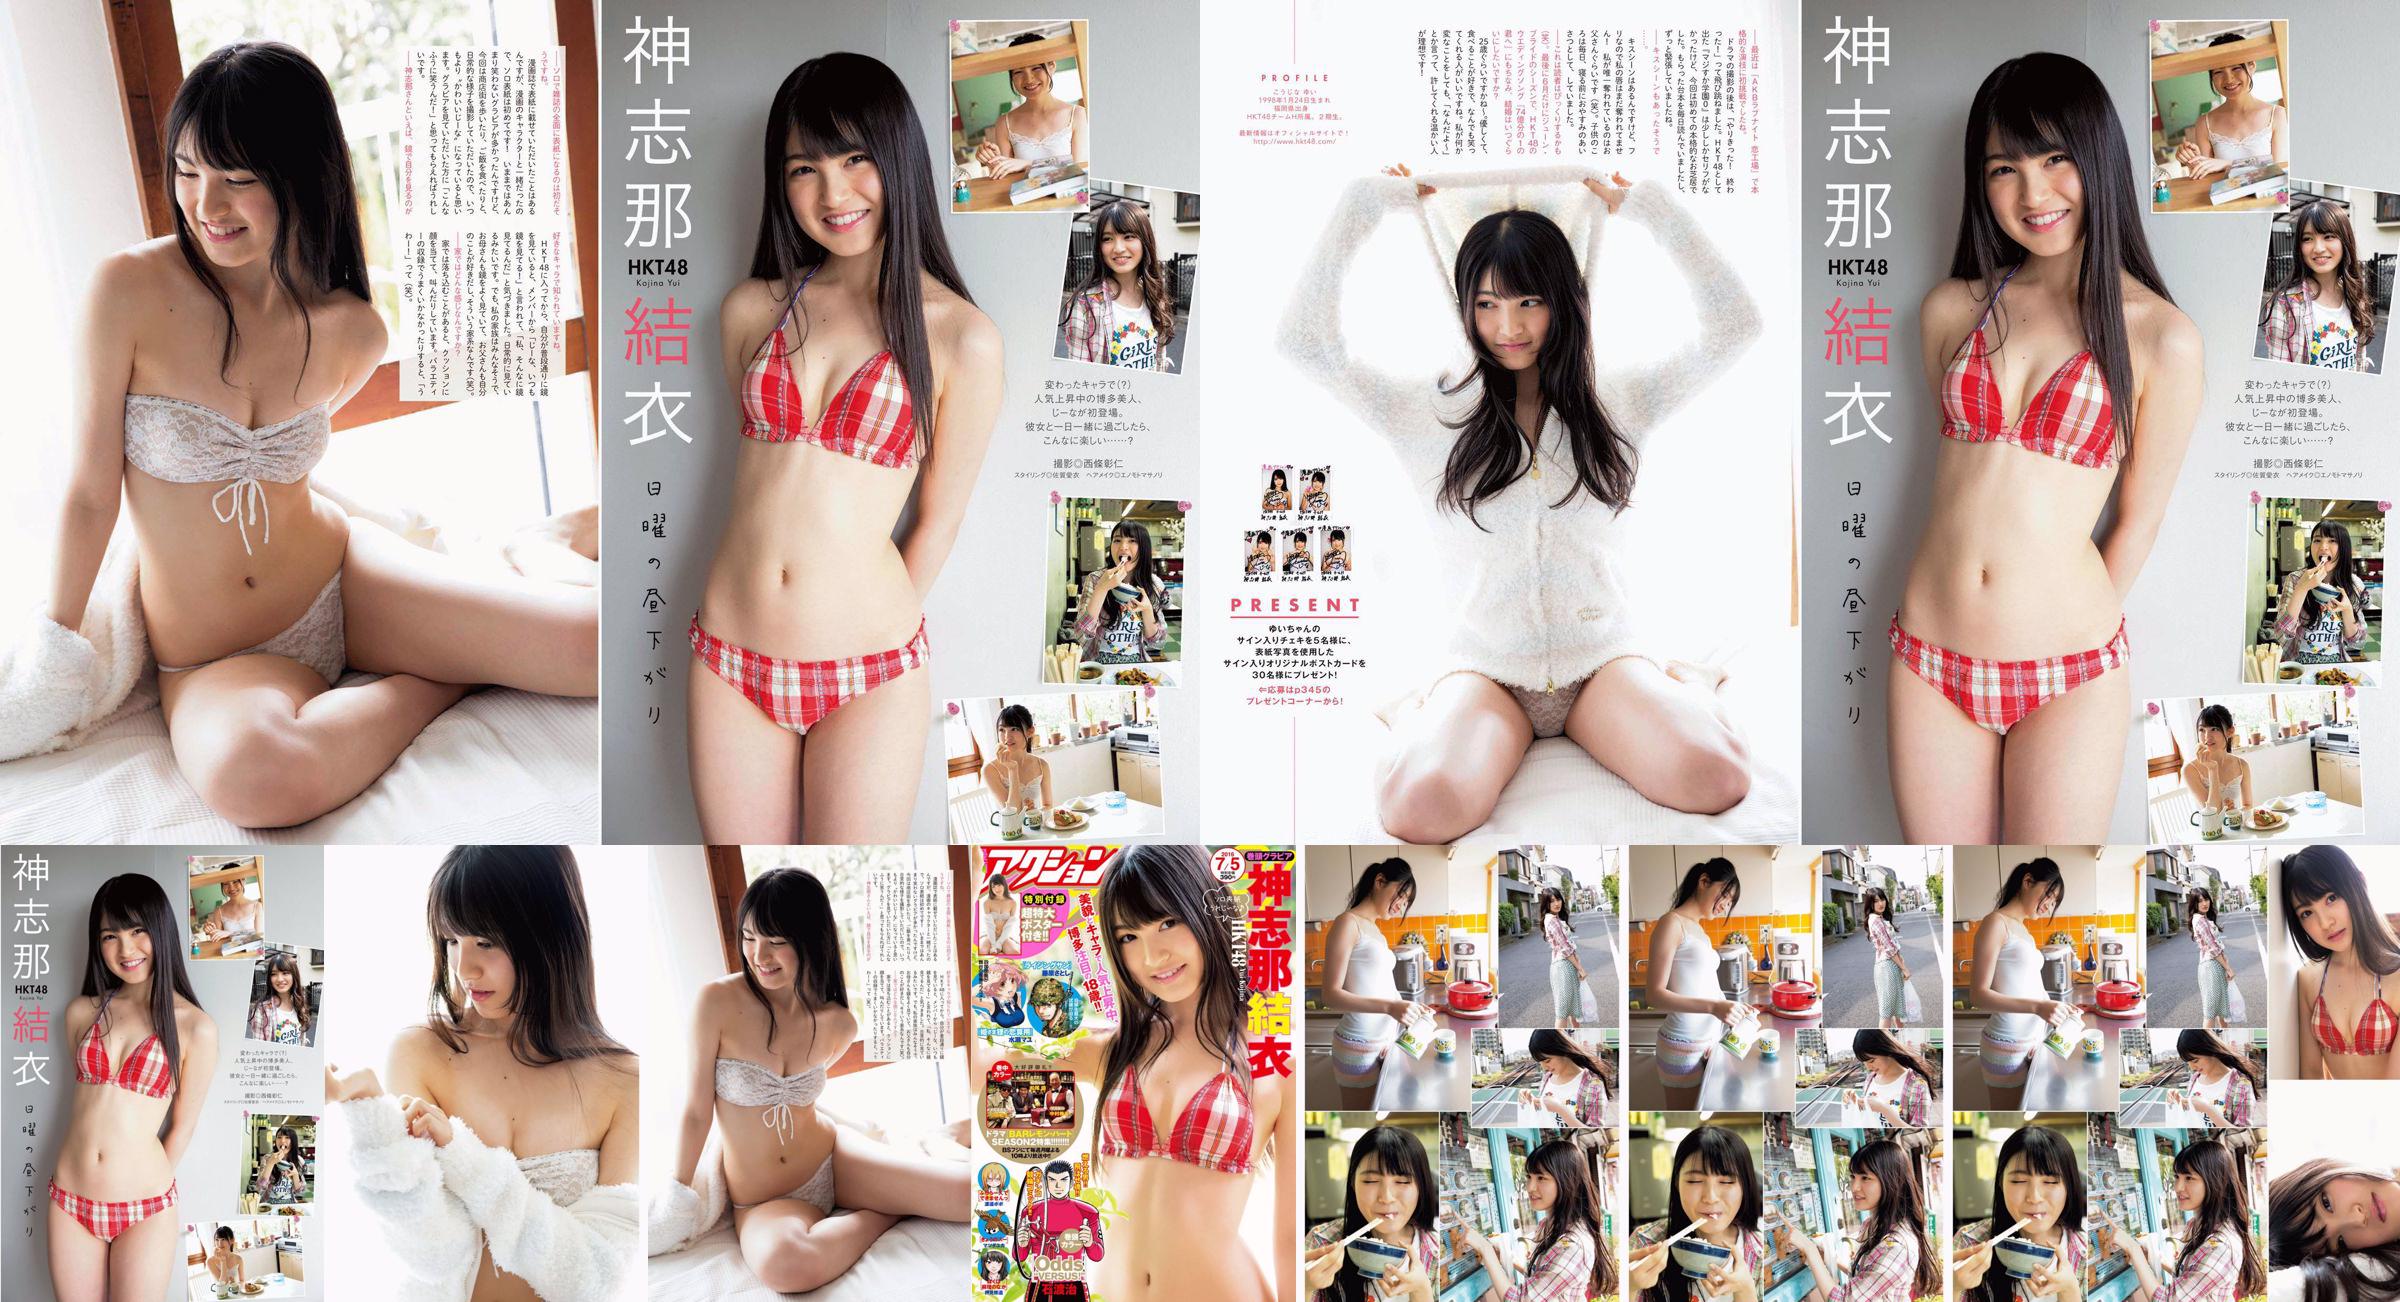 [Manga Action] Shinshina Yui 2016 N ° 13 Photo Magazine No.1d6408 Page 1